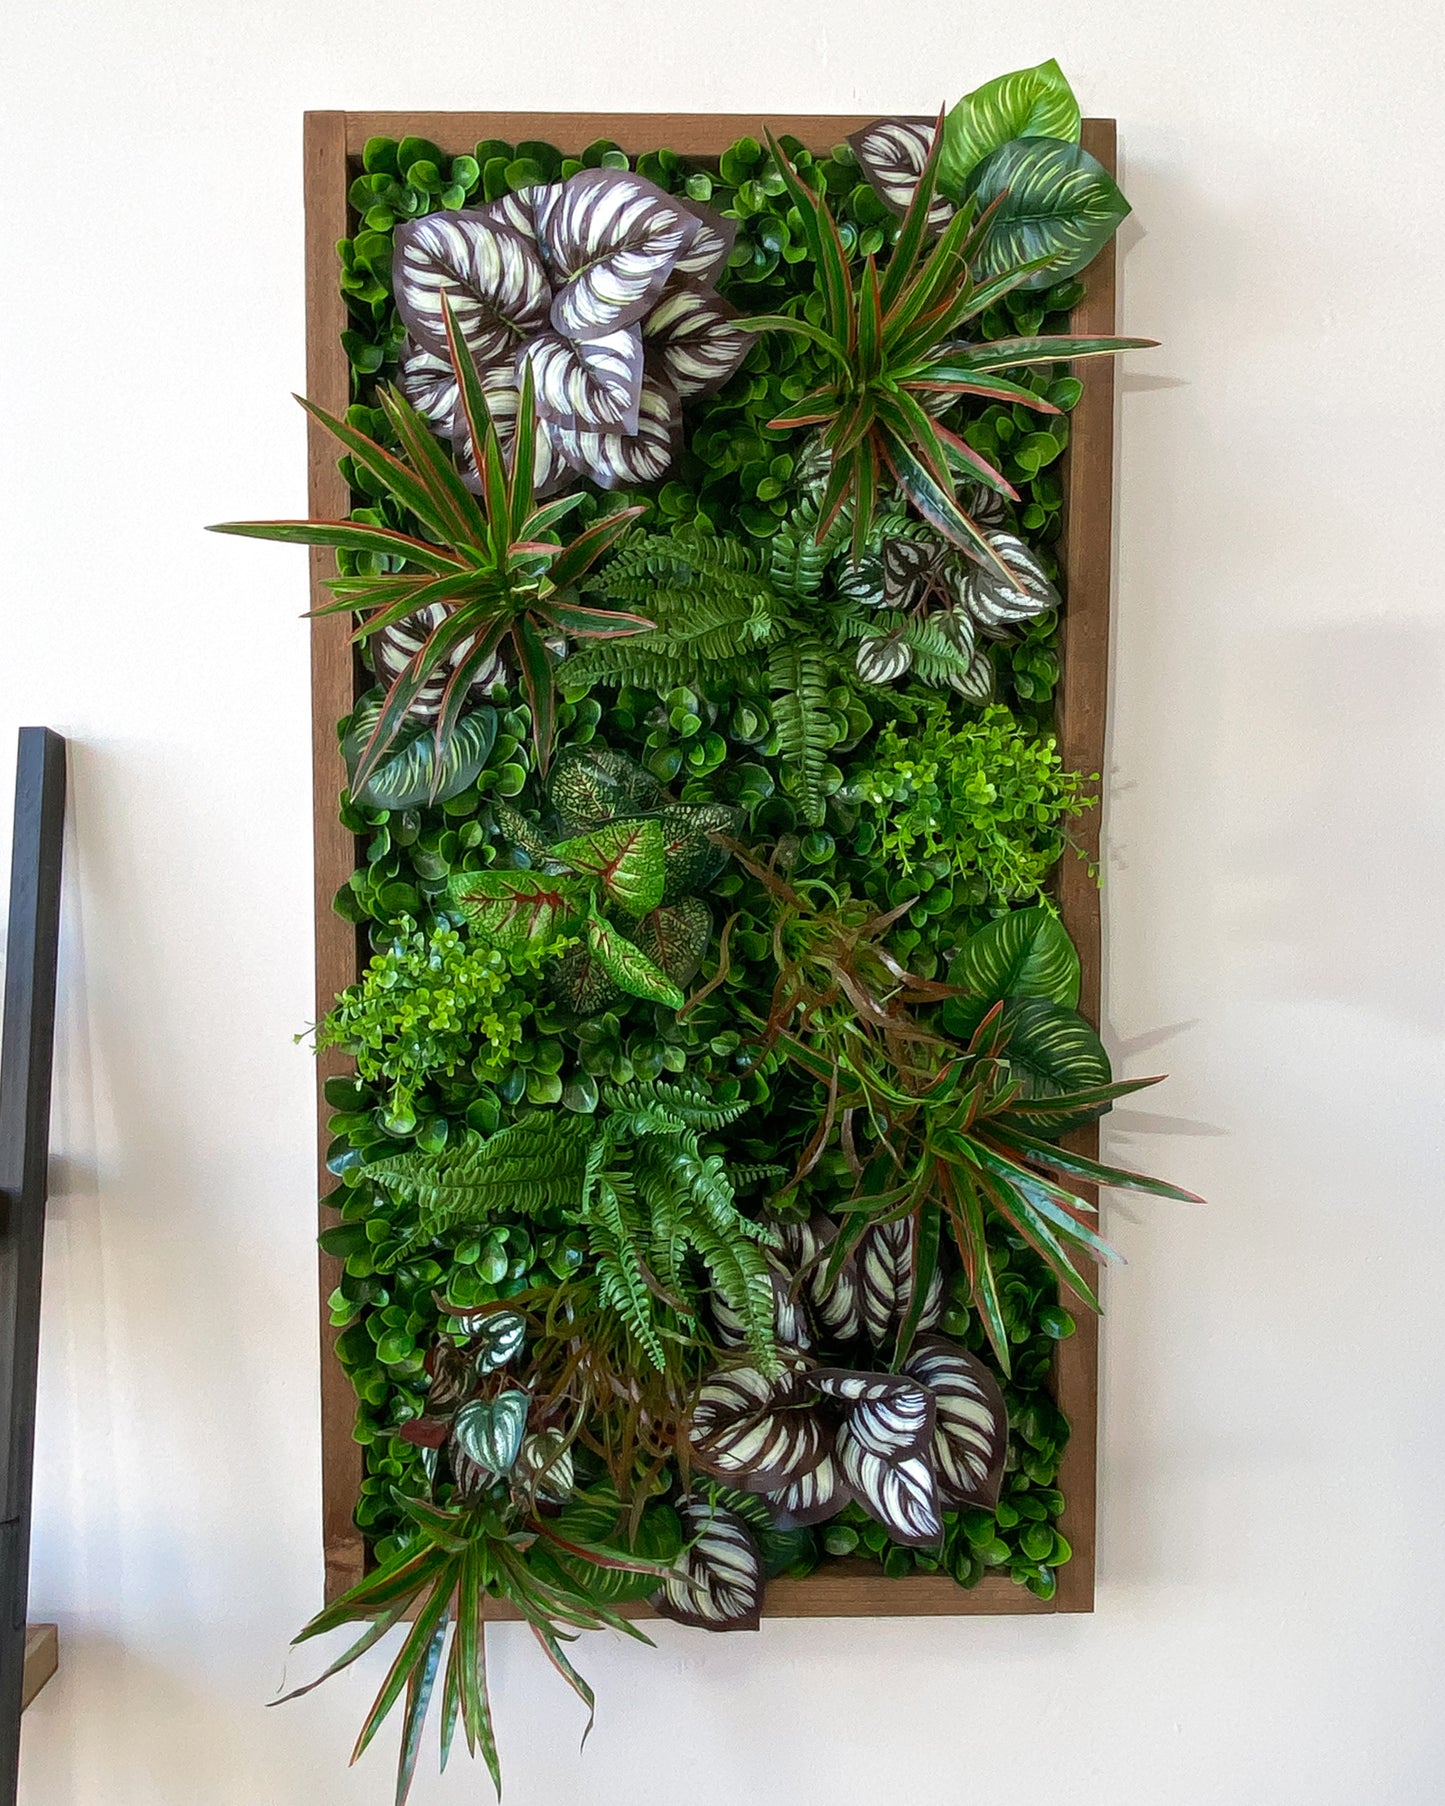 Plantframe/Pflanzenwand/Mooswand "SORNA" aus Realtouch Kunstpflanzen in Fichtenholzrahmen